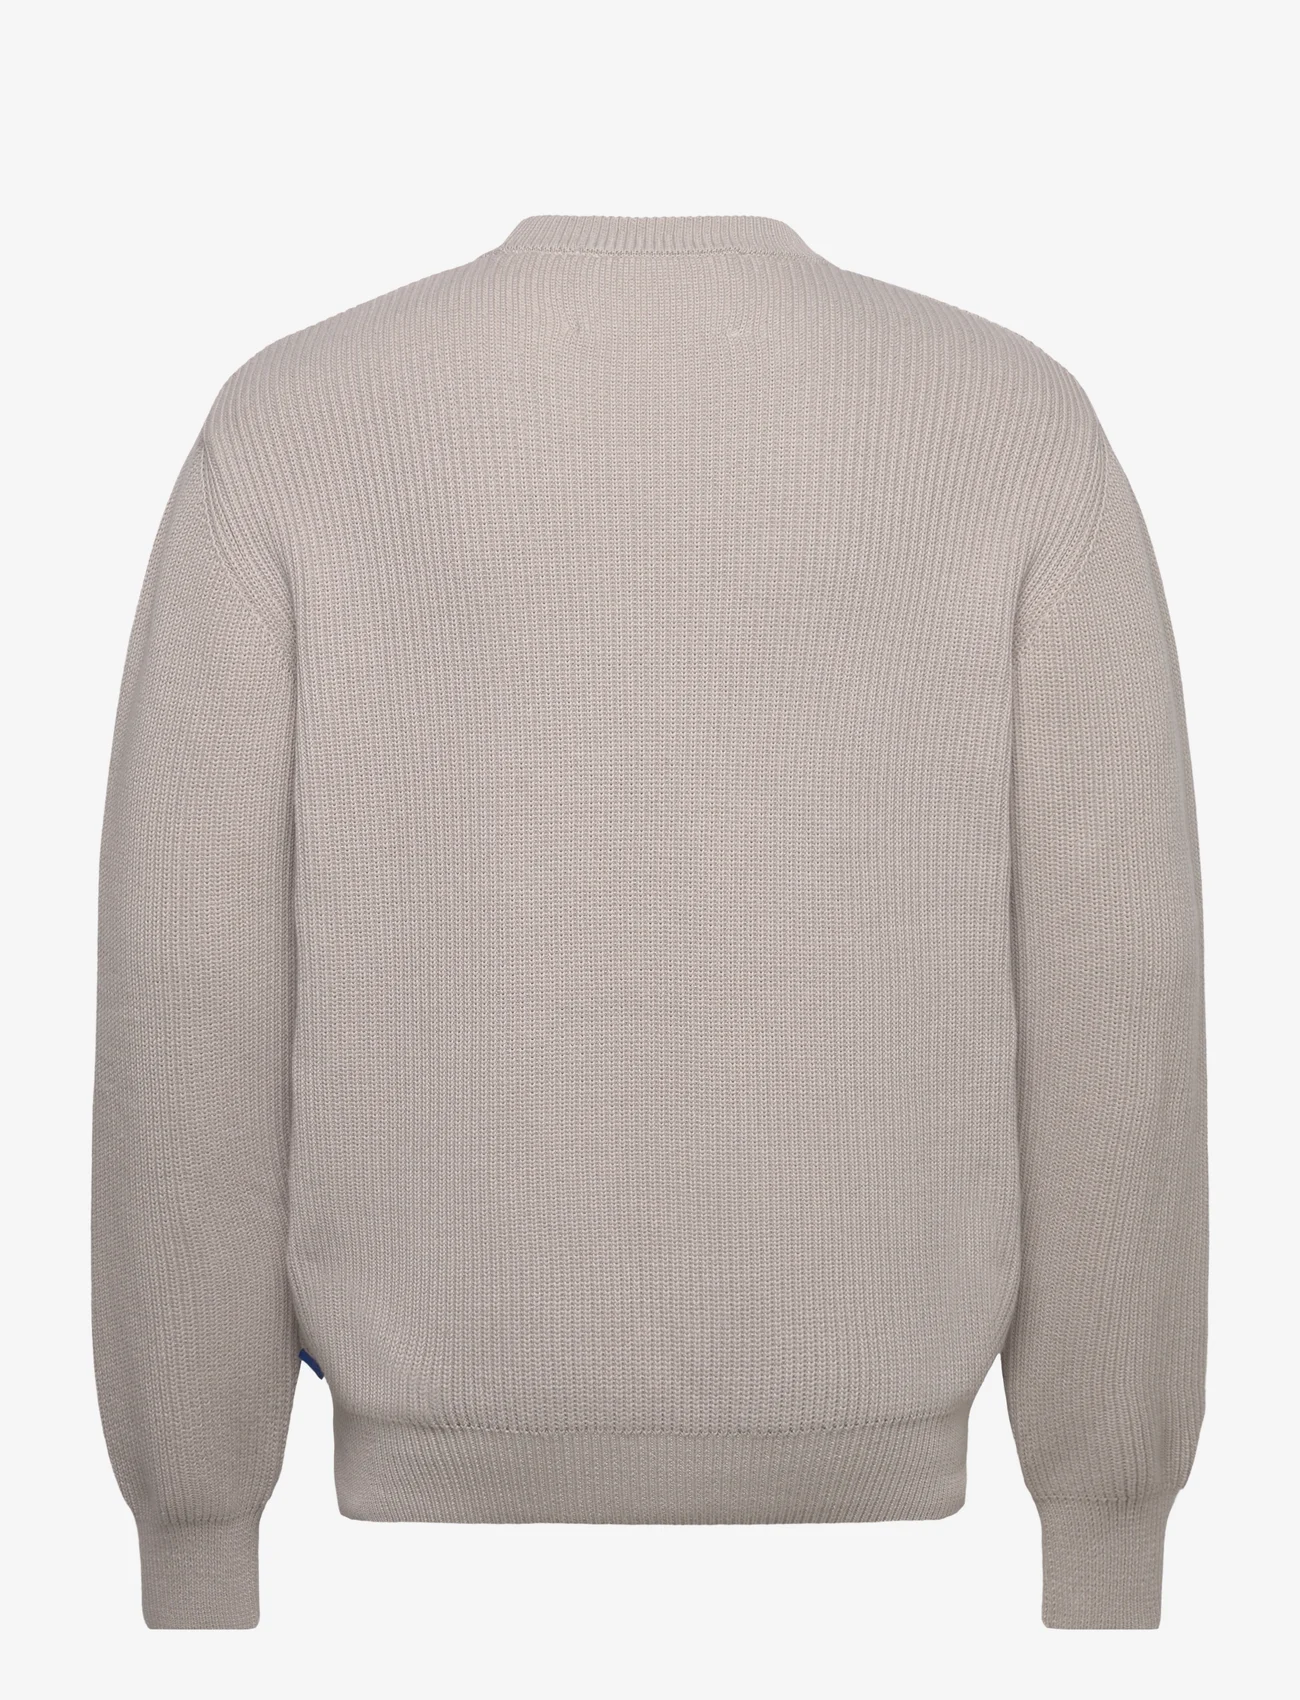 Garment Project - Round Neck Knit - Light Grey - rundhals - light grey - 1